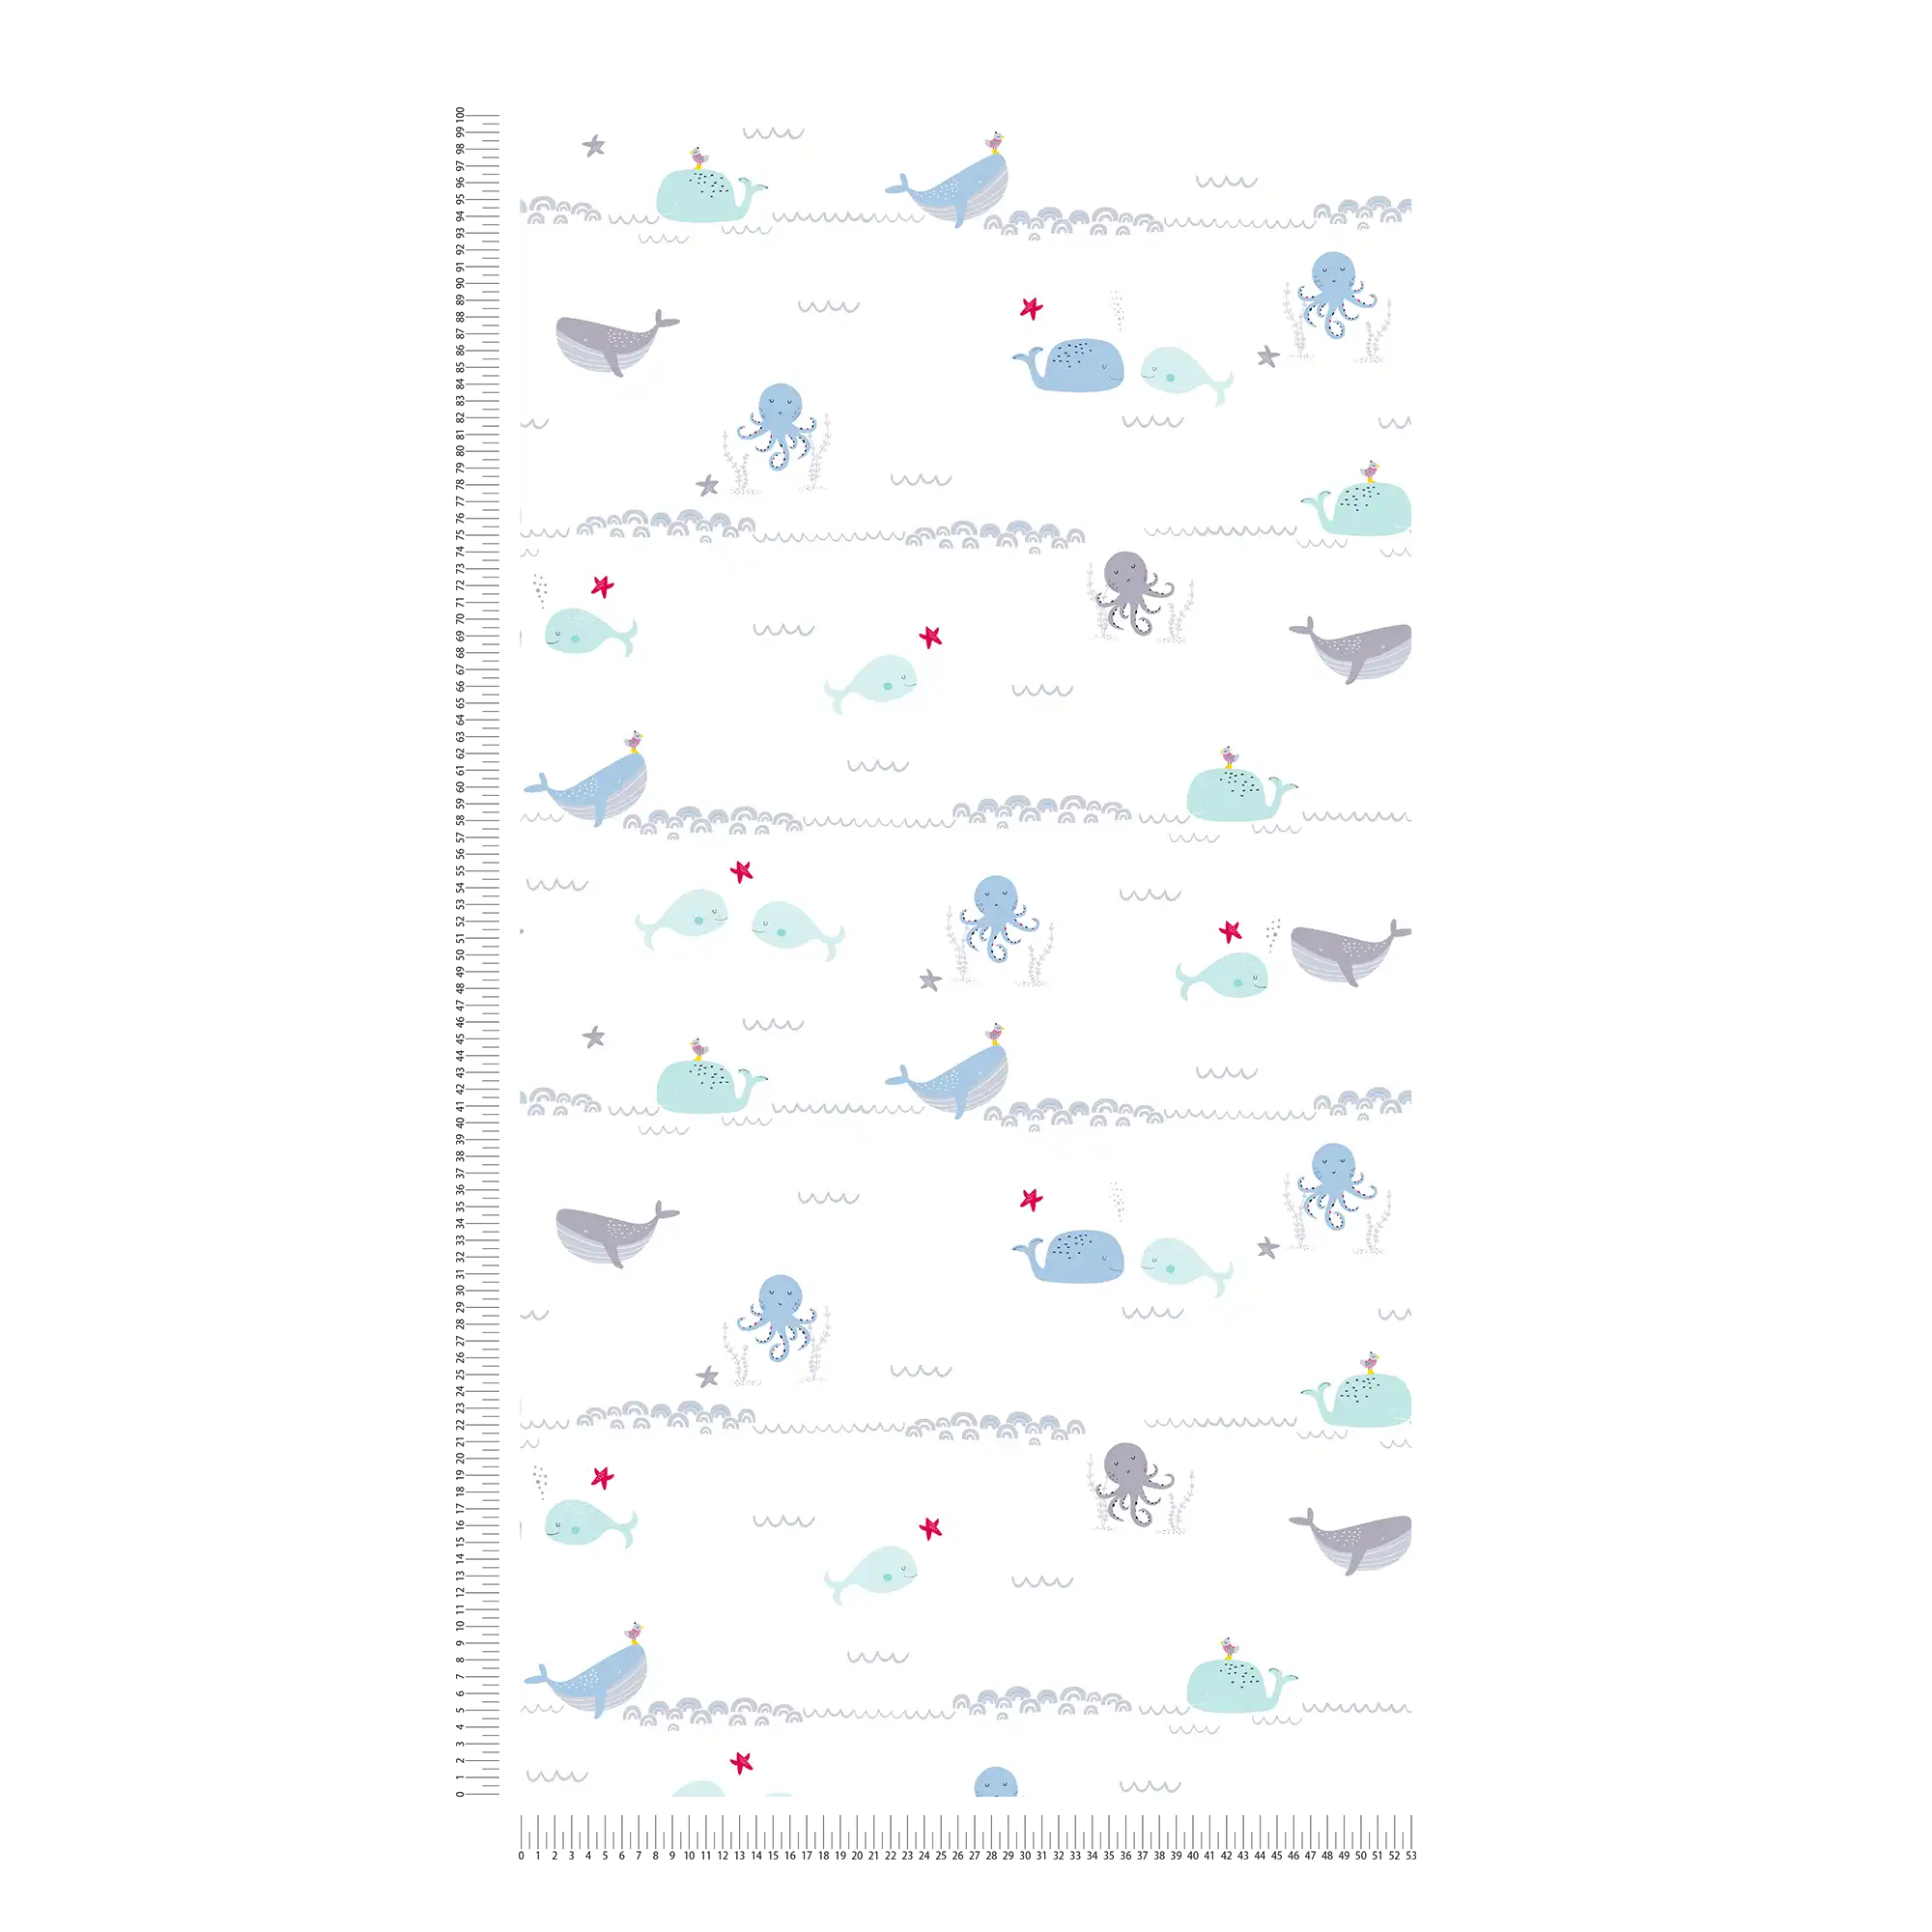             Nursery wallpaper sea animals - blue, grey, white
        